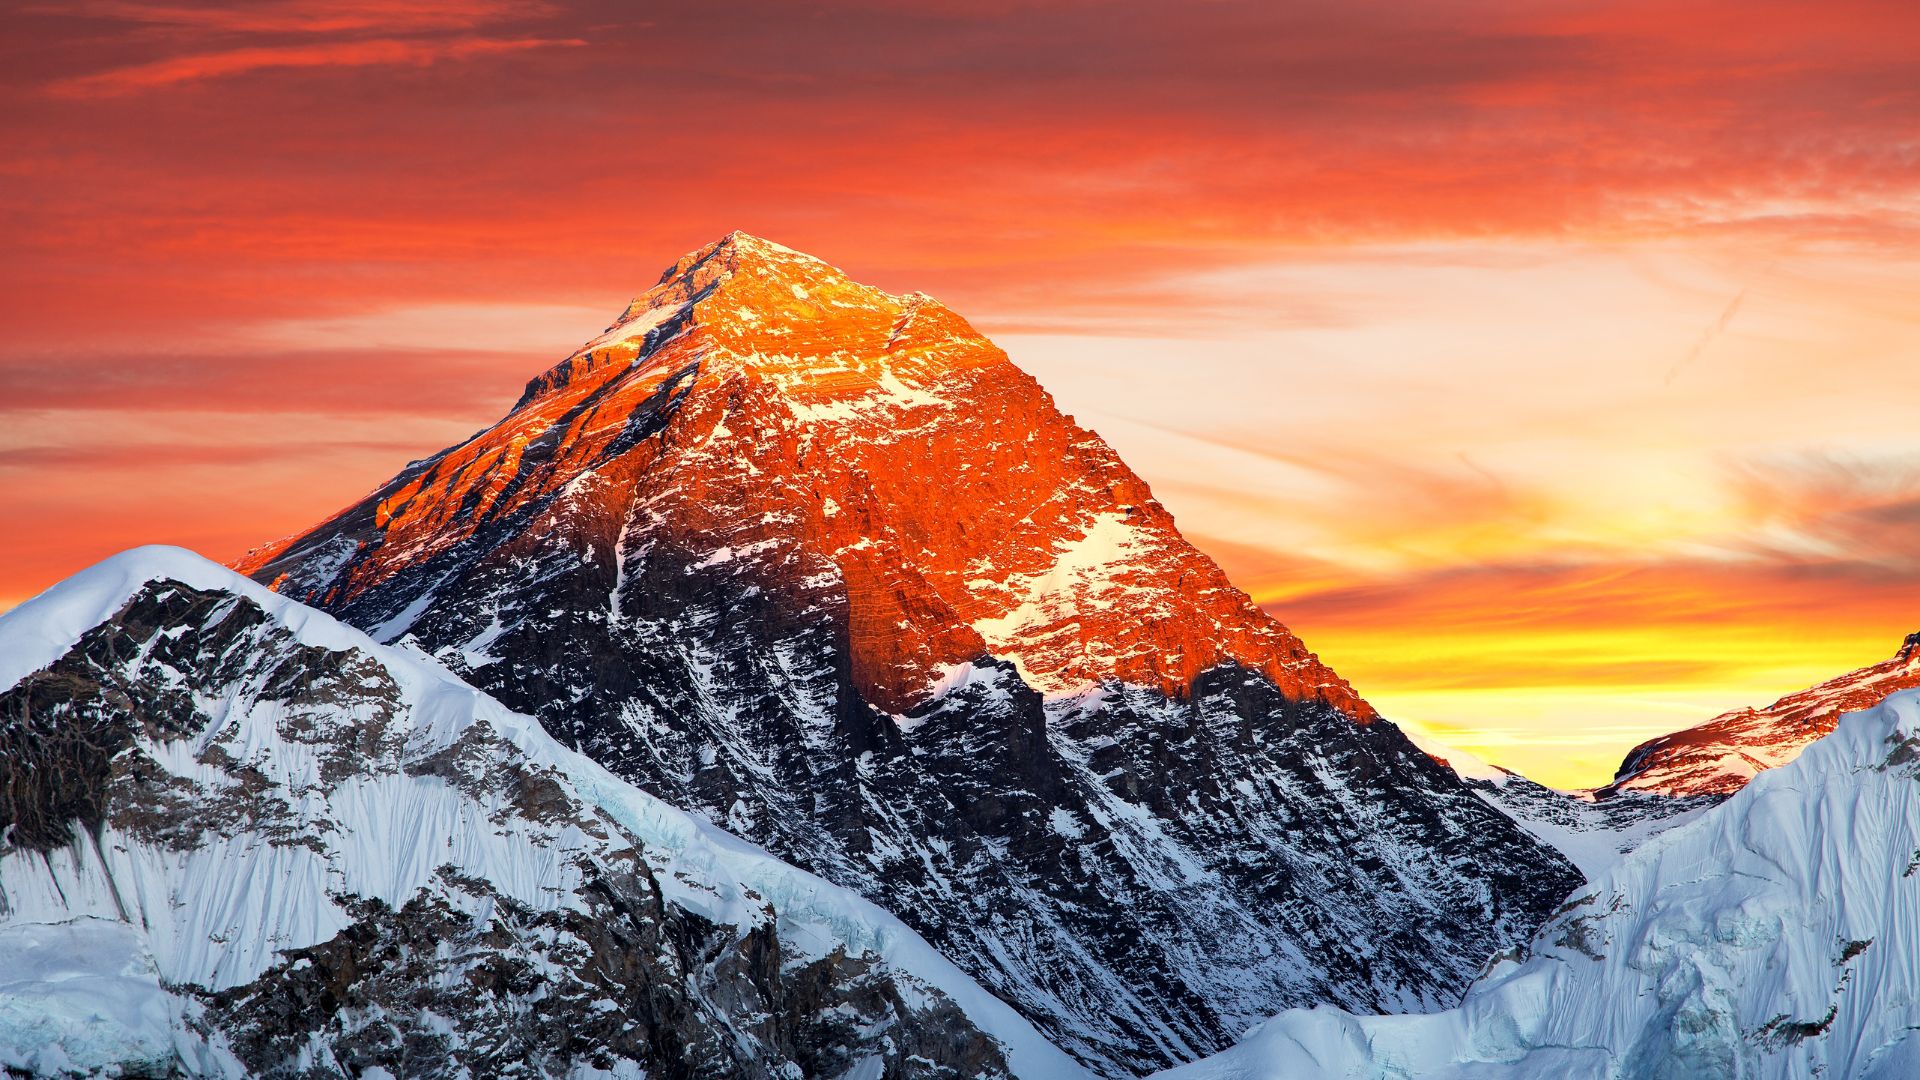 Mount Everest in Nepal